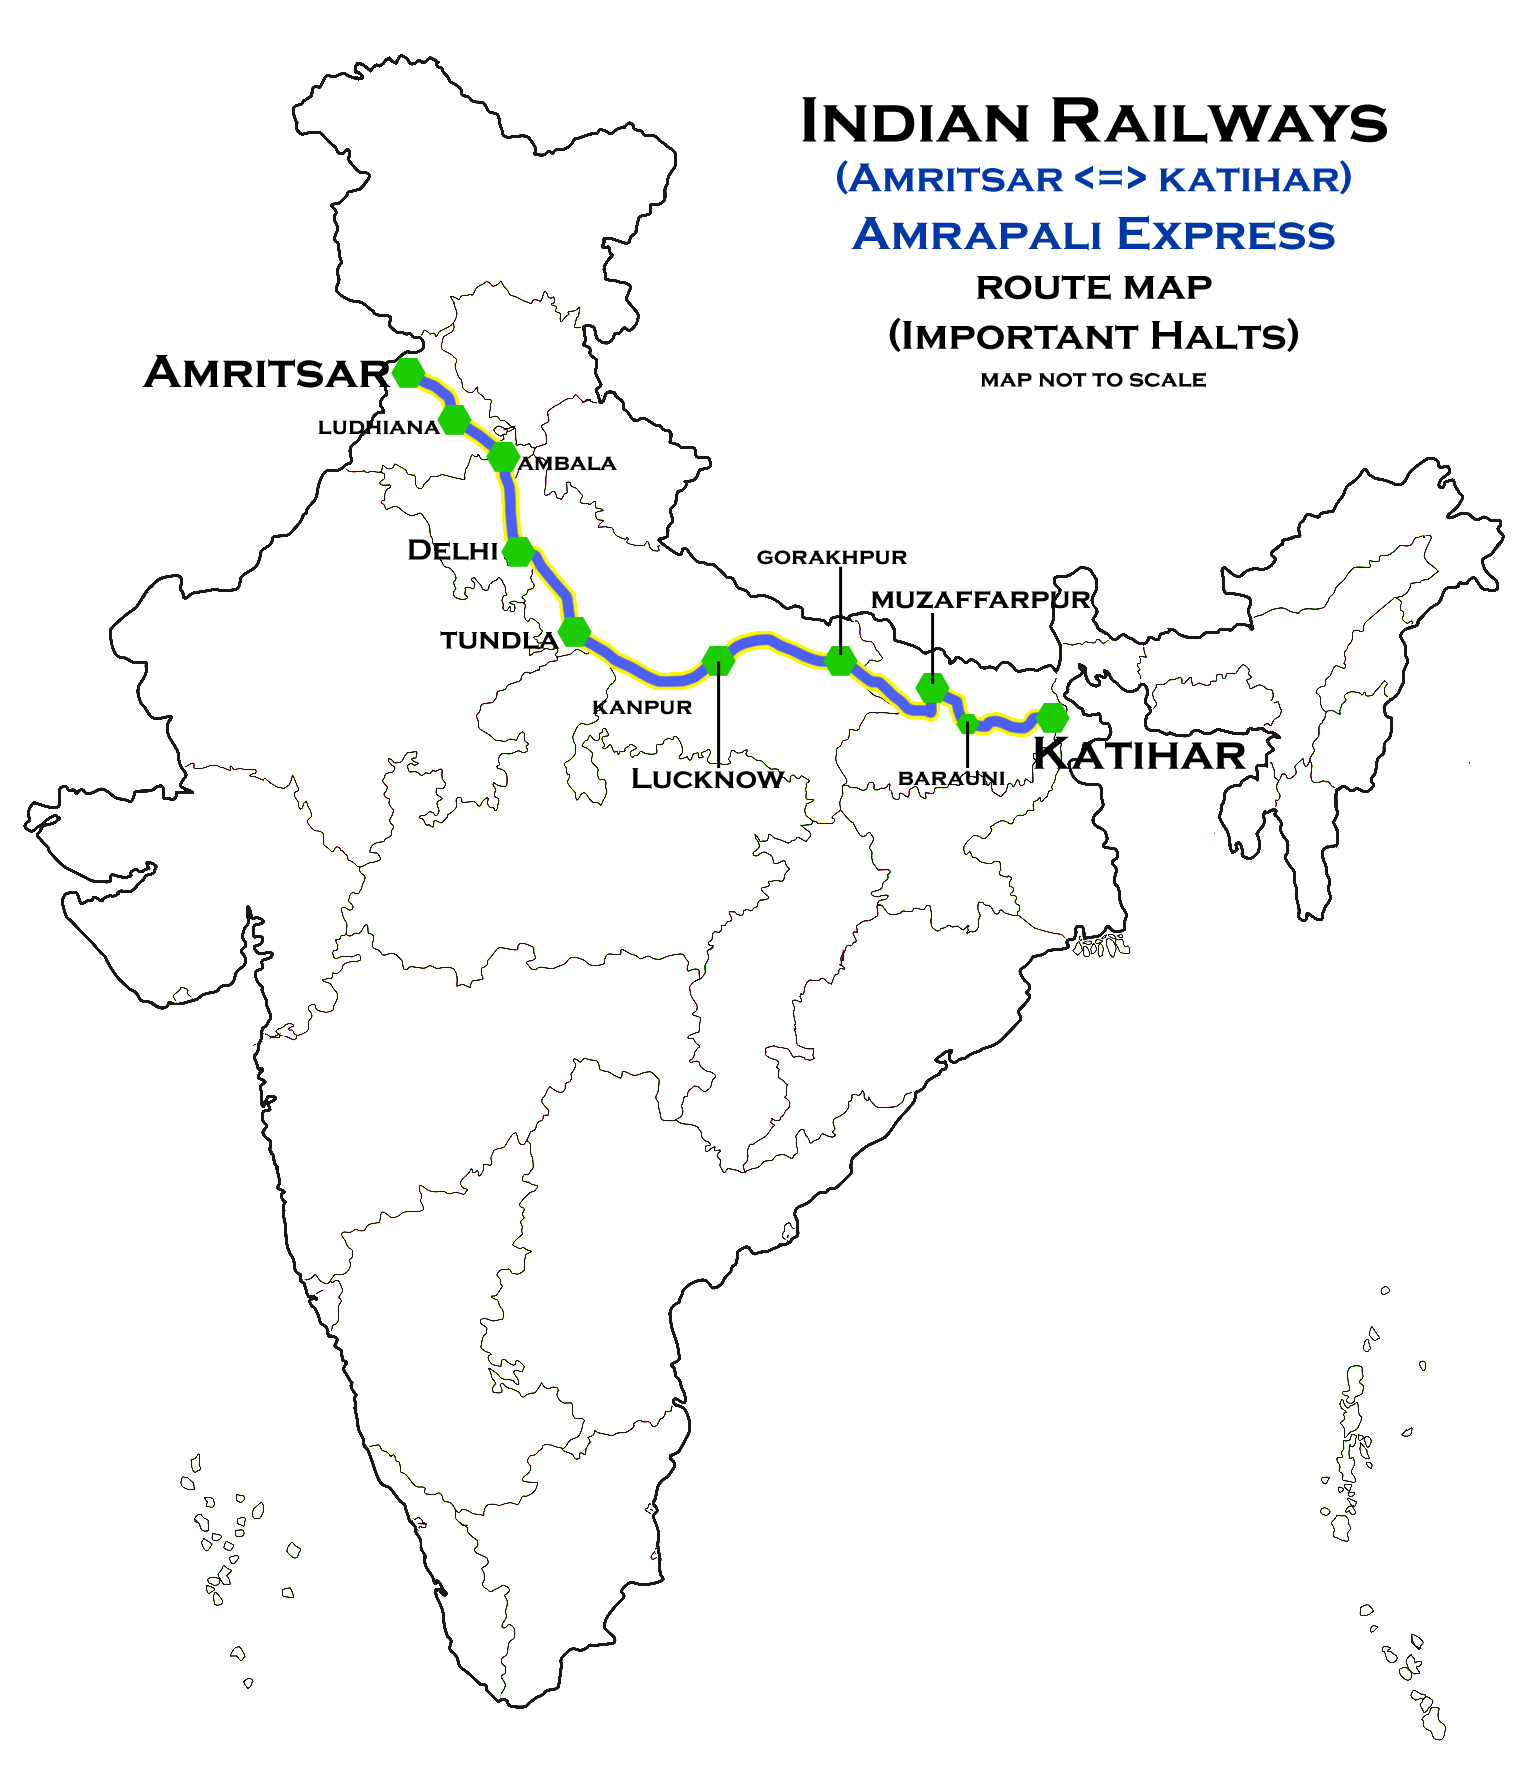 Amrapali_Express_(Amritsar_-_Katihar)_Ro